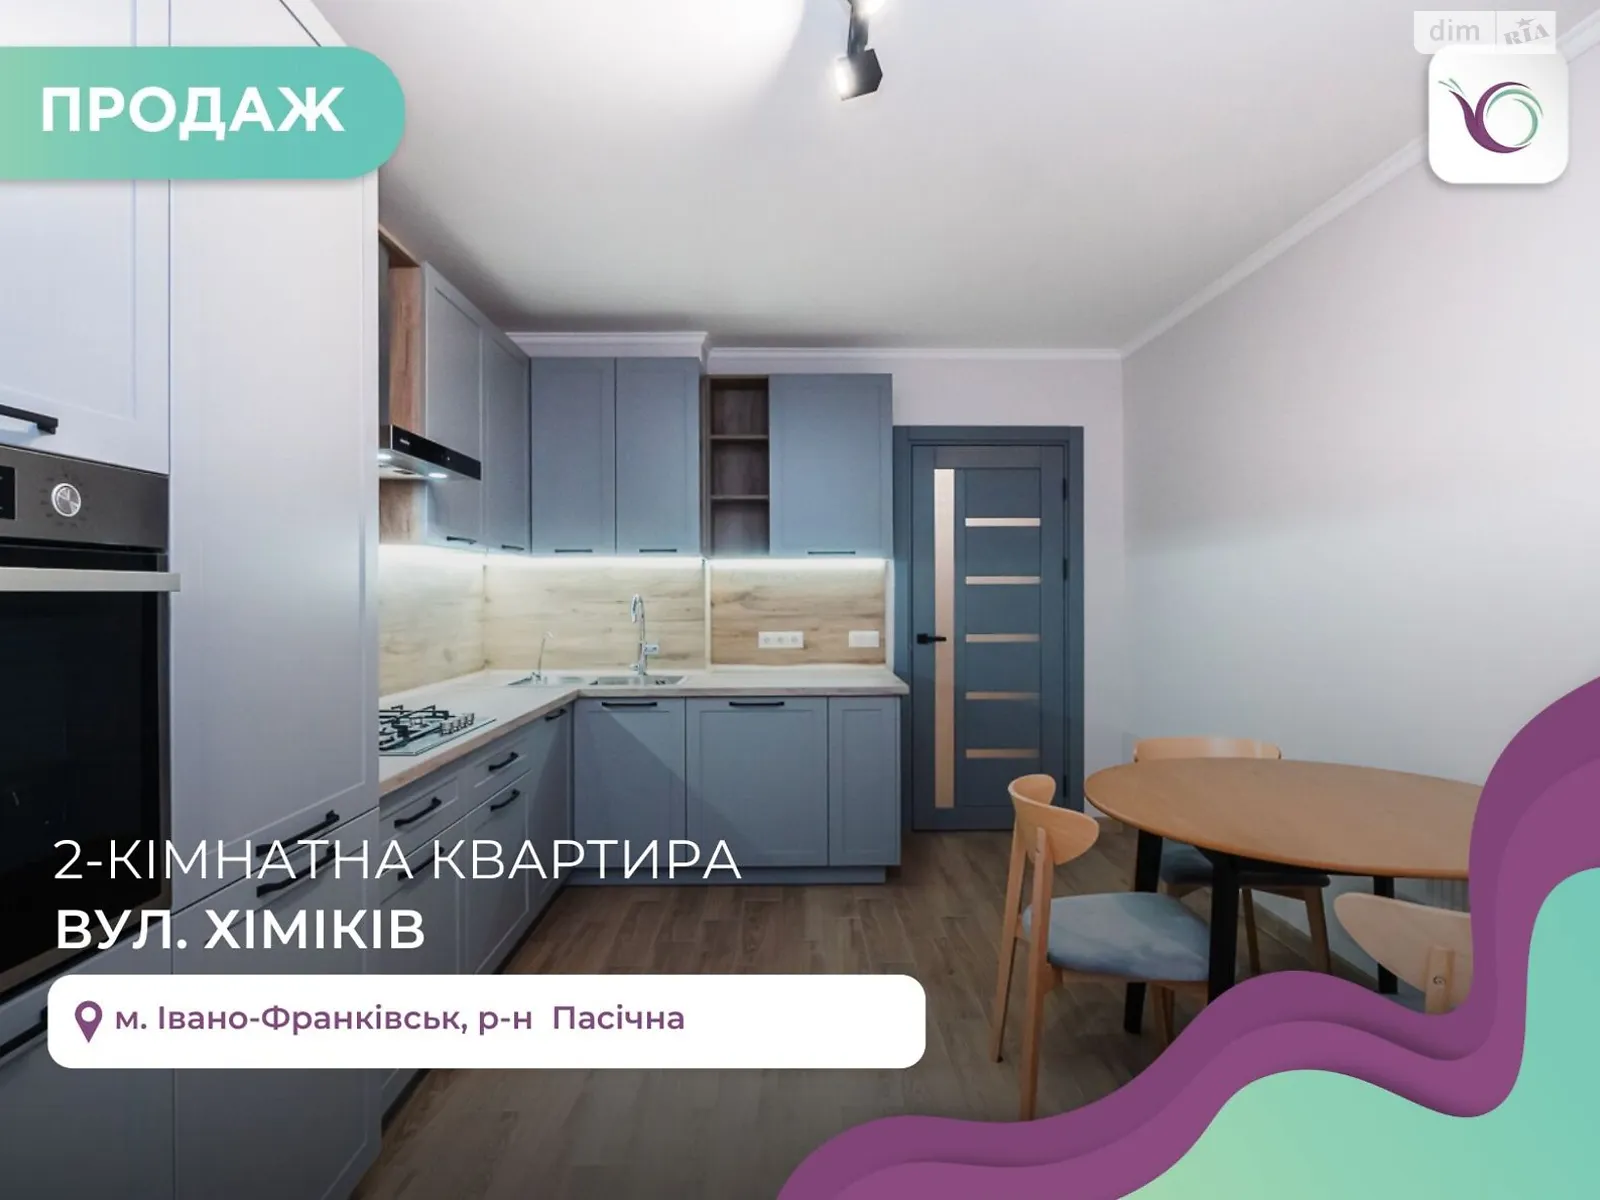 Продается 2-комнатная квартира 73.1 кв. м в Ивано-Франковске - фото 1